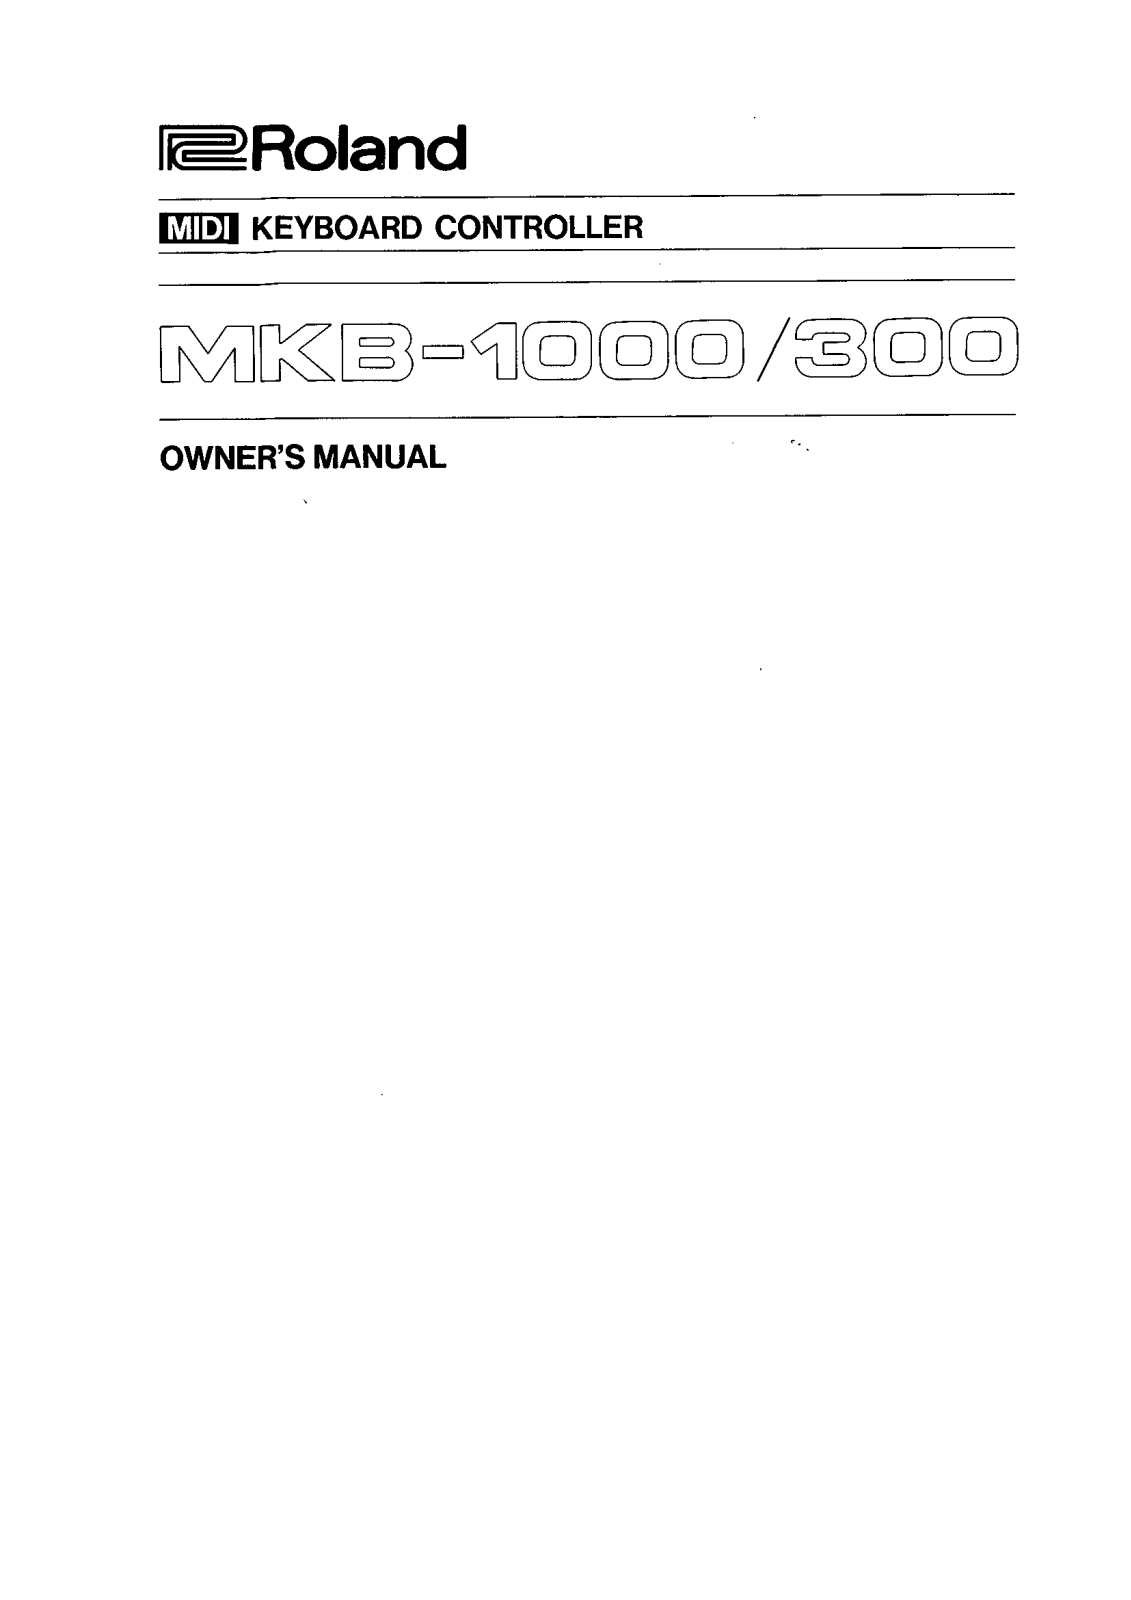 Roland MKB 300 Service Manual